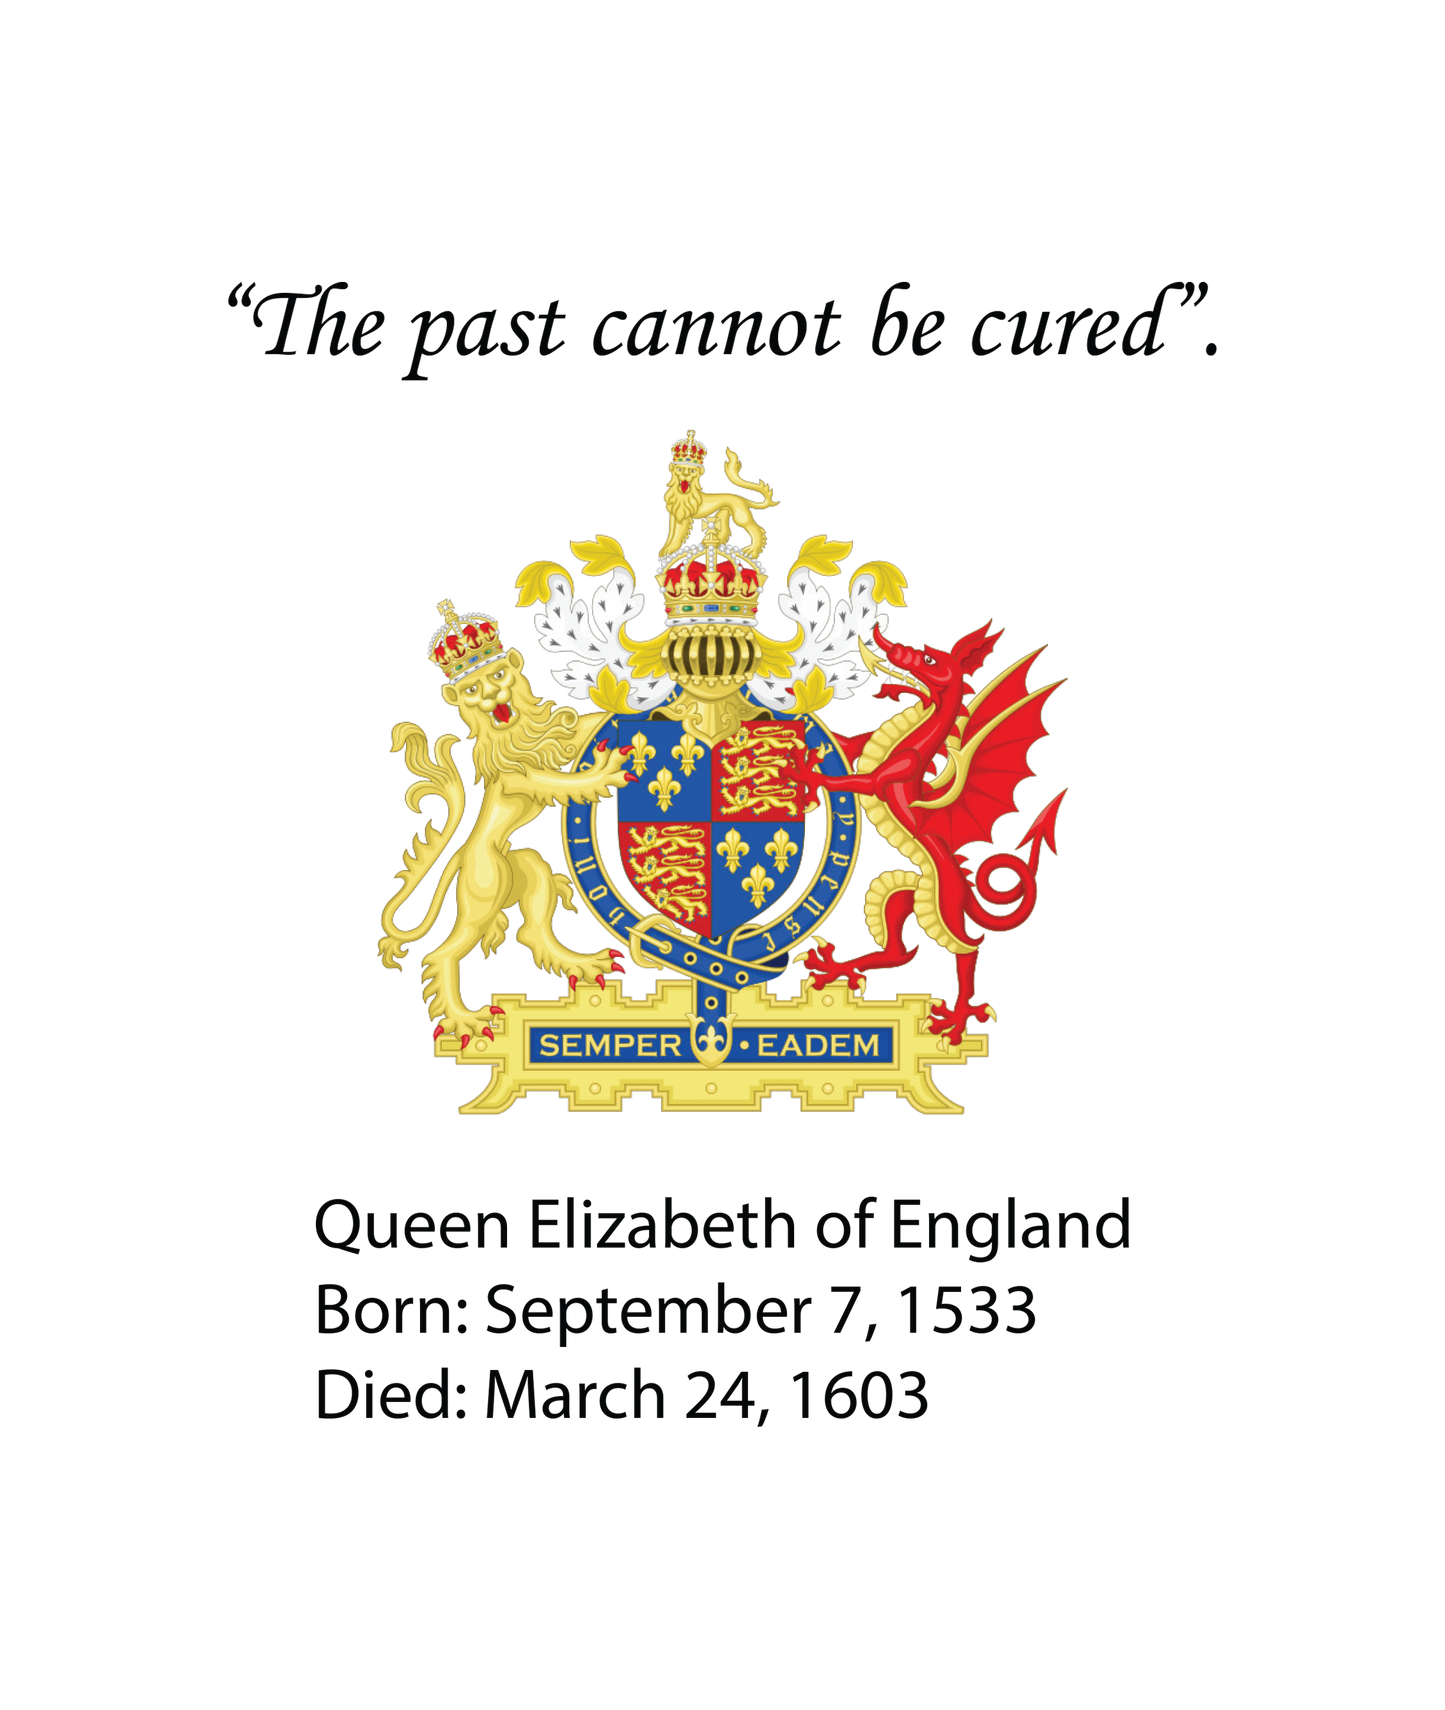 Queen Elizabeth I Unisex T-Shirt - Black